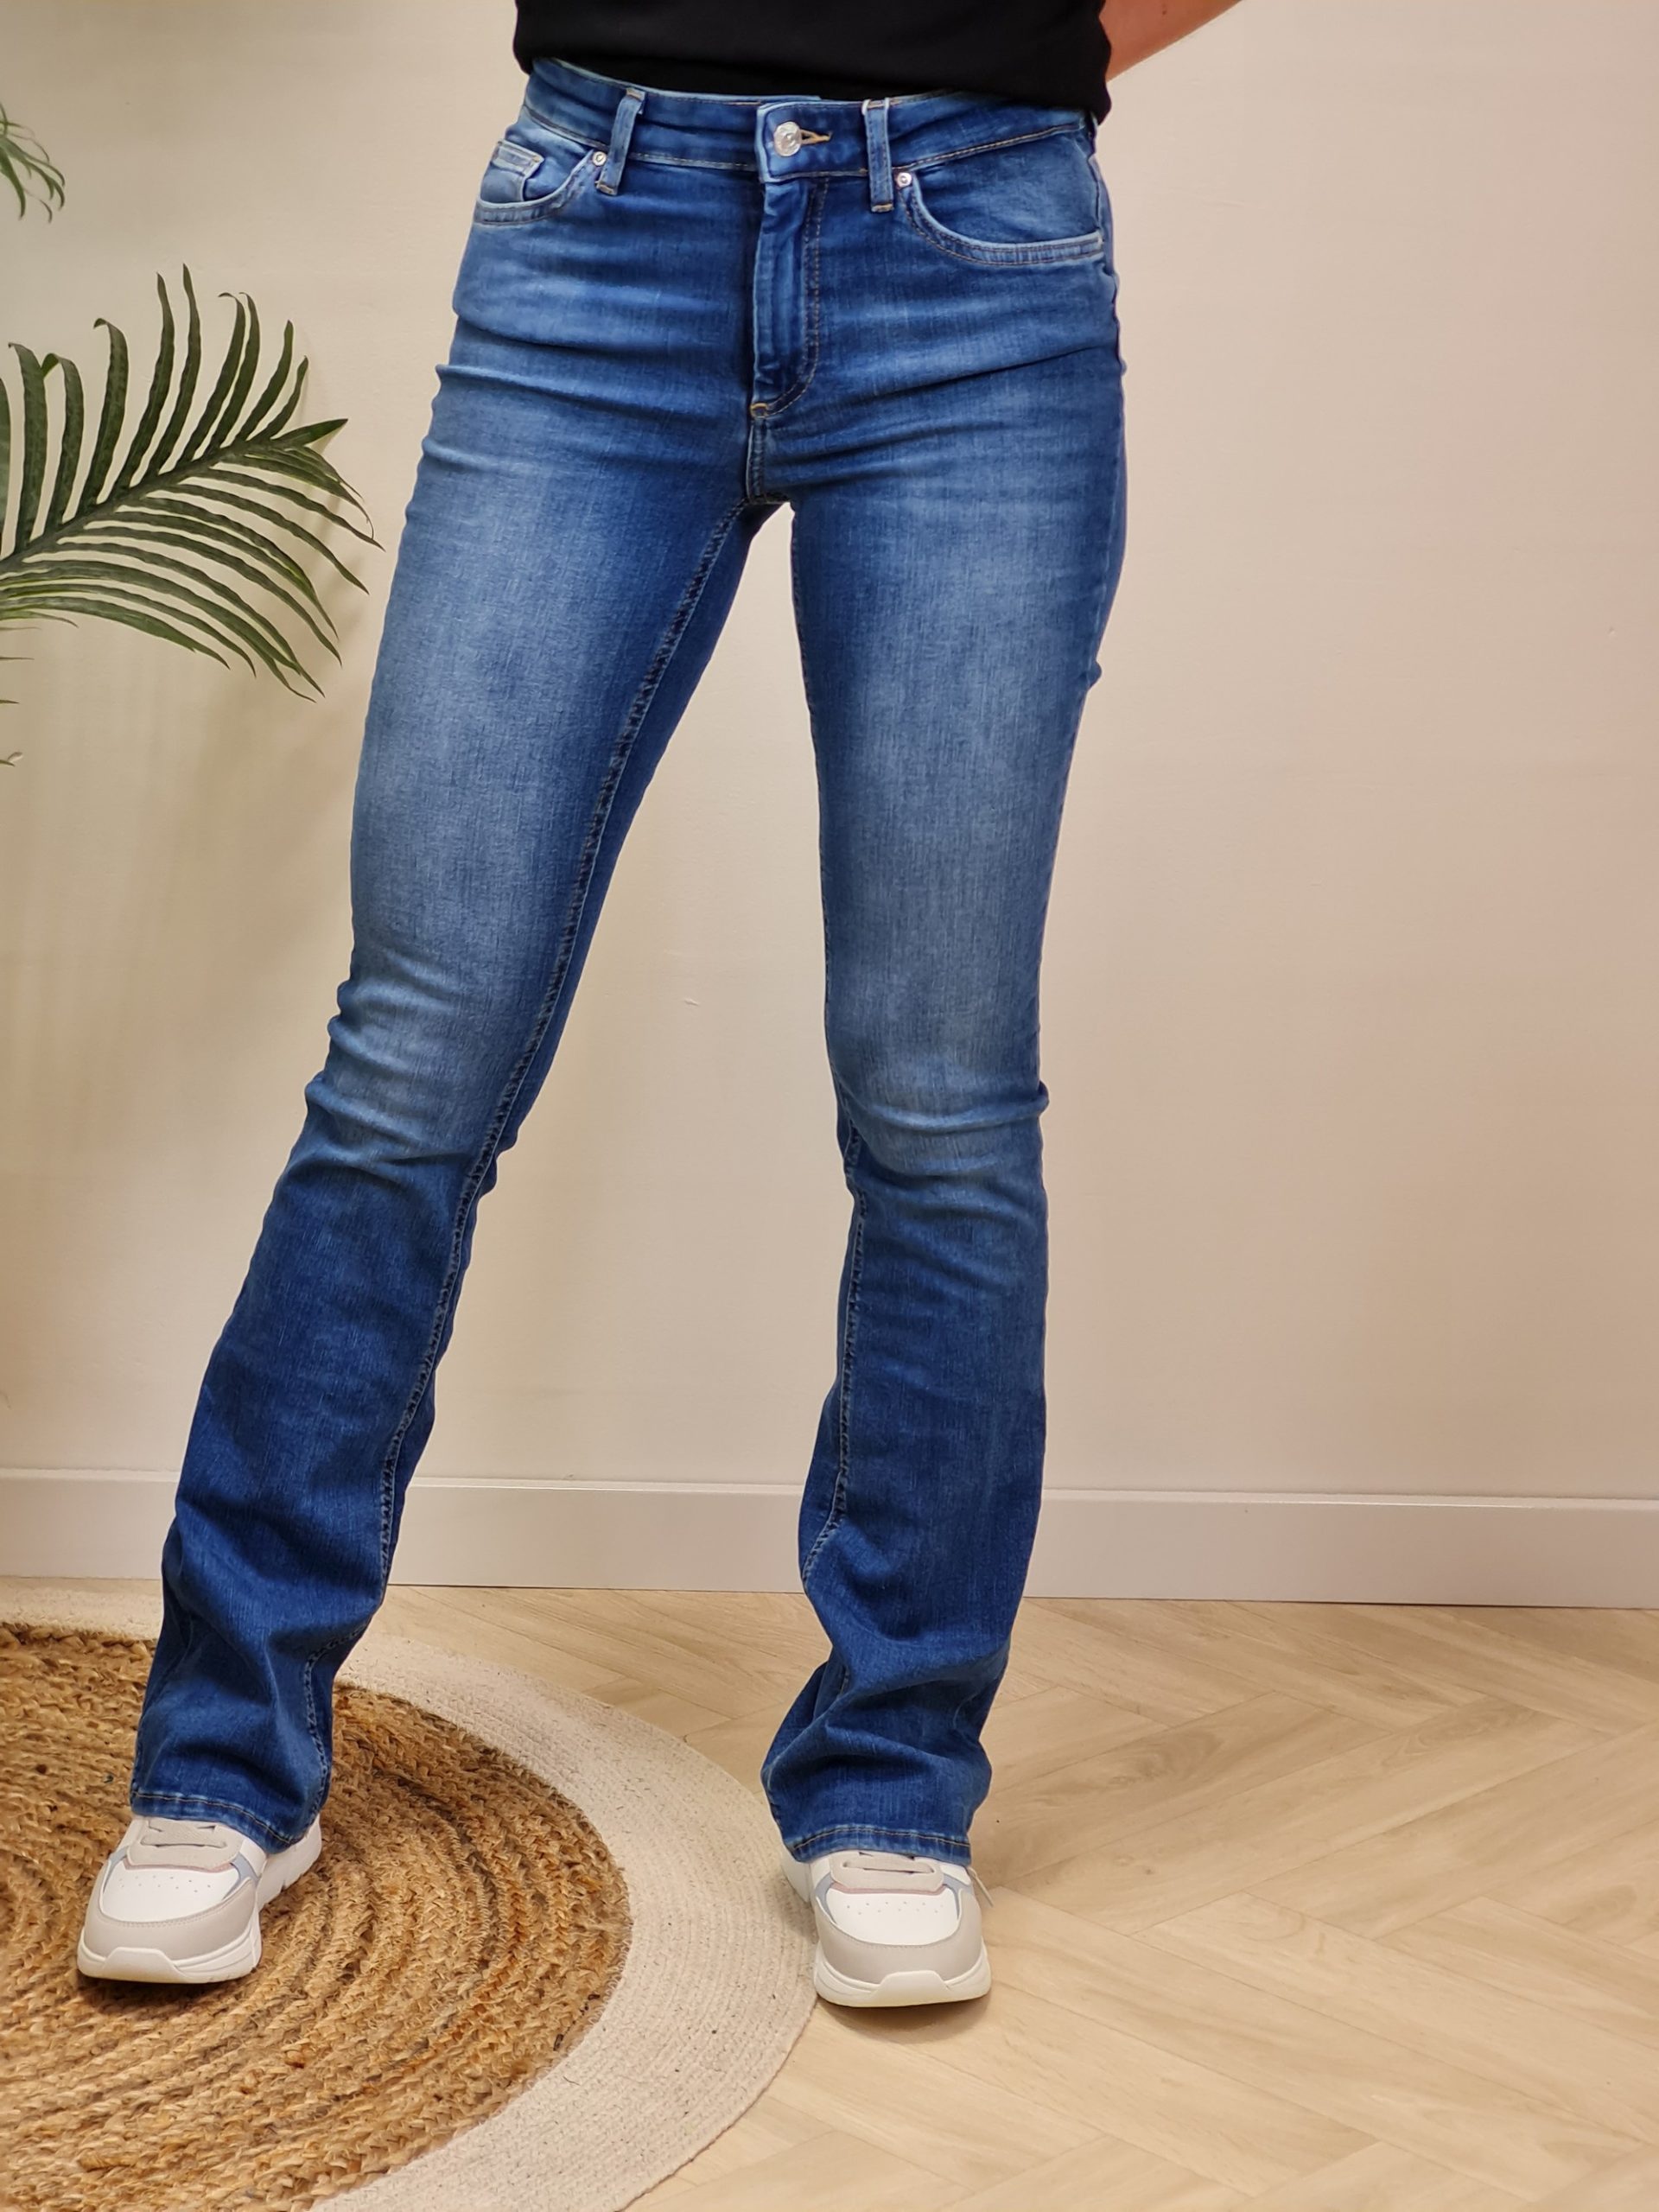 neef Beperking streepje Flared jeans medium blue (lengtemaat 32) - Trendzonline.nl